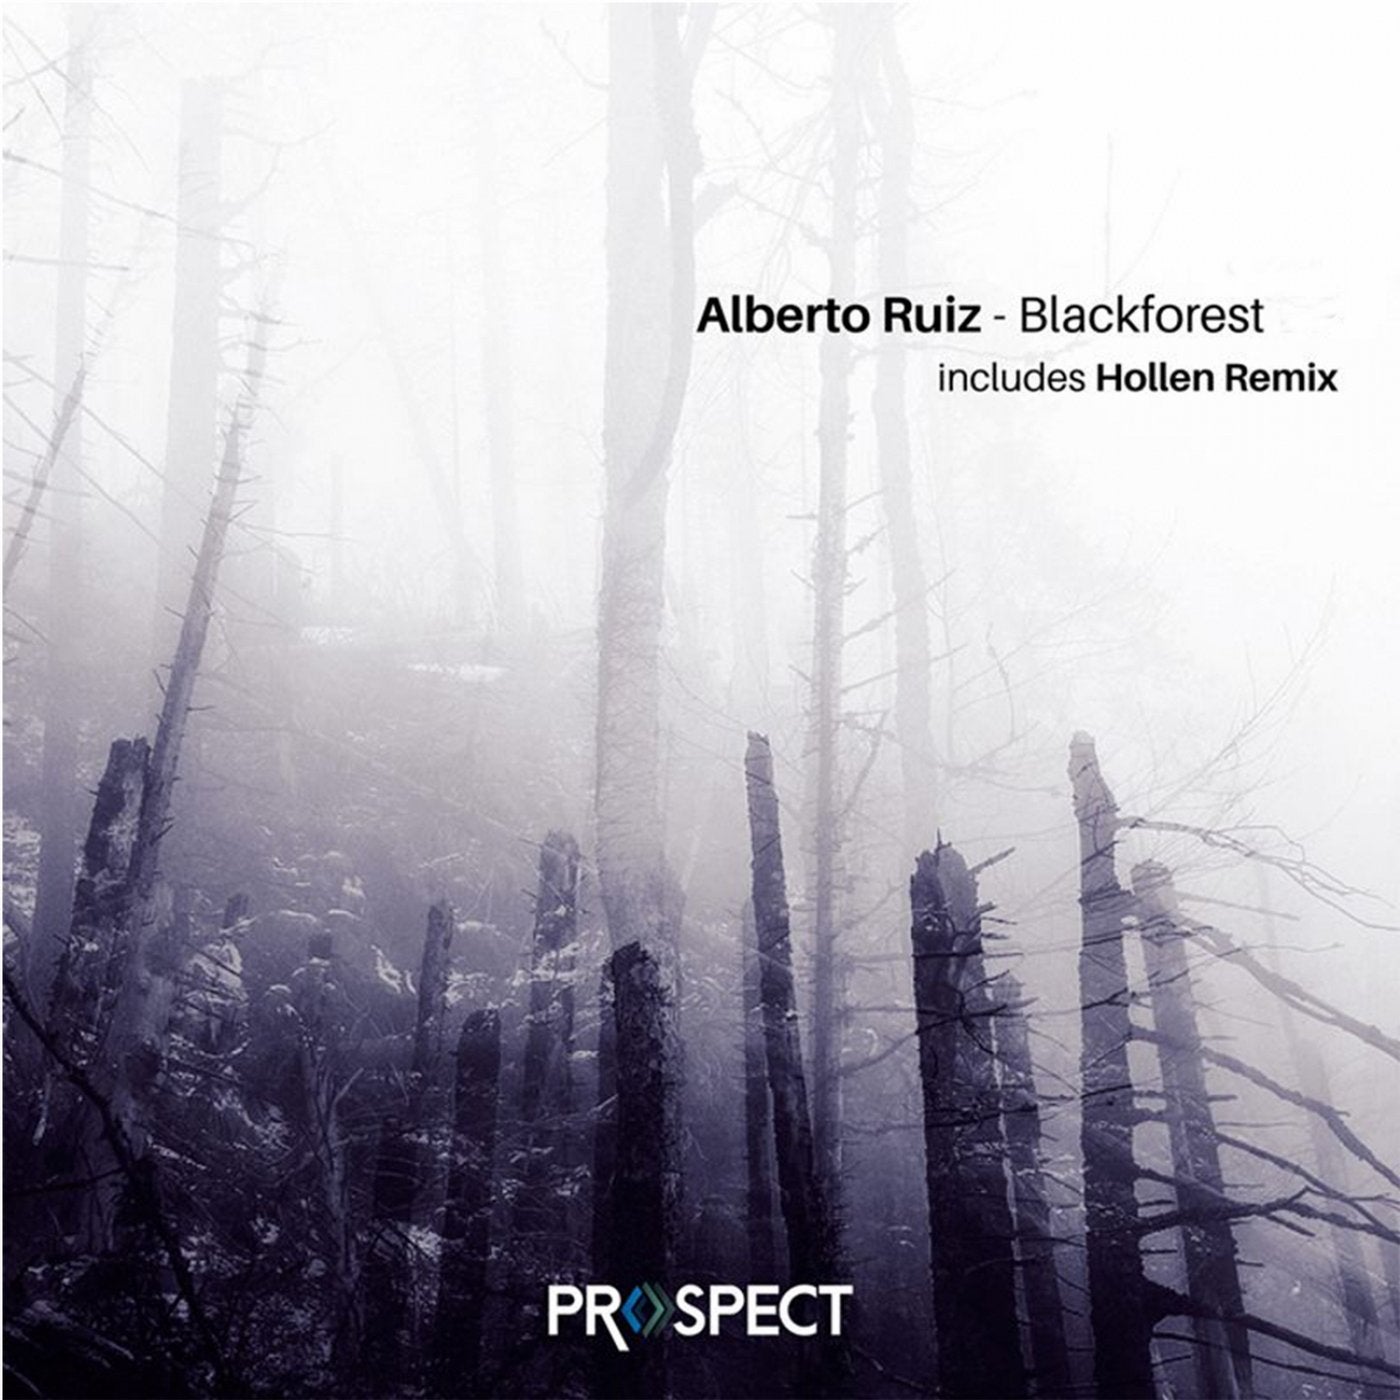 Blackforest